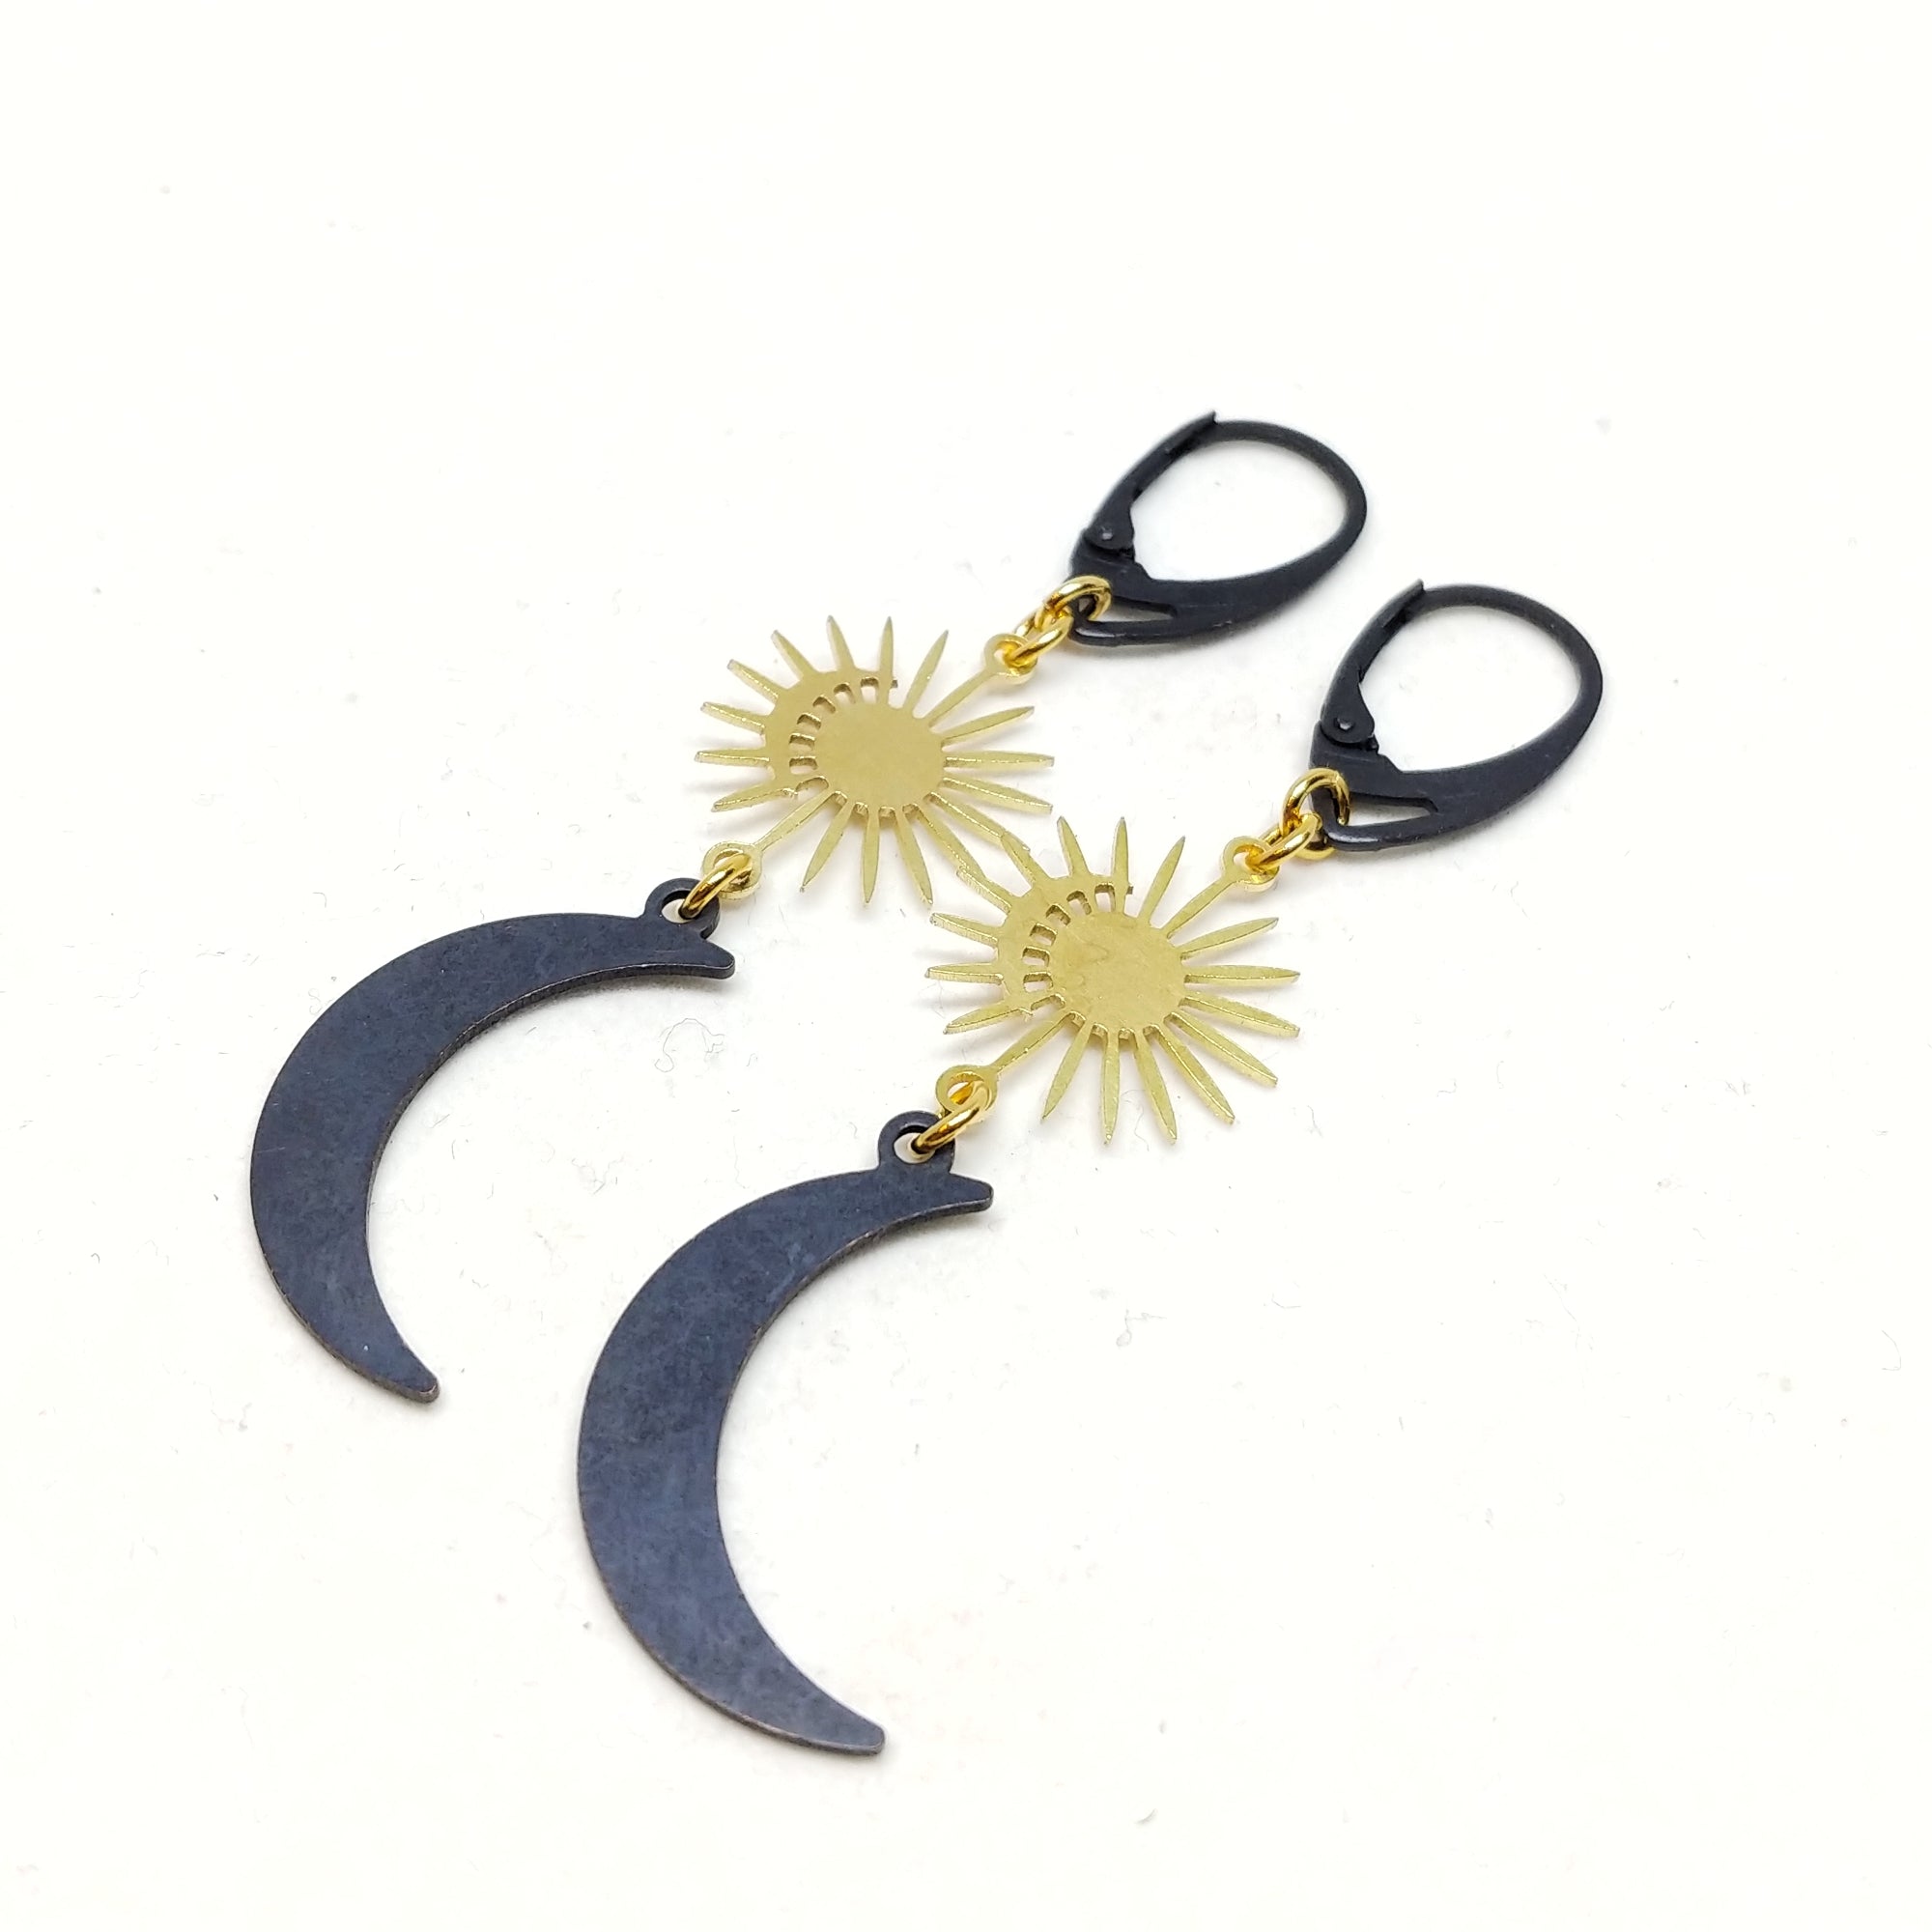 65mm oxidized black brass lever back ear hooks with raw brass sun & moon link with oxidized black brass crescent moon charm.